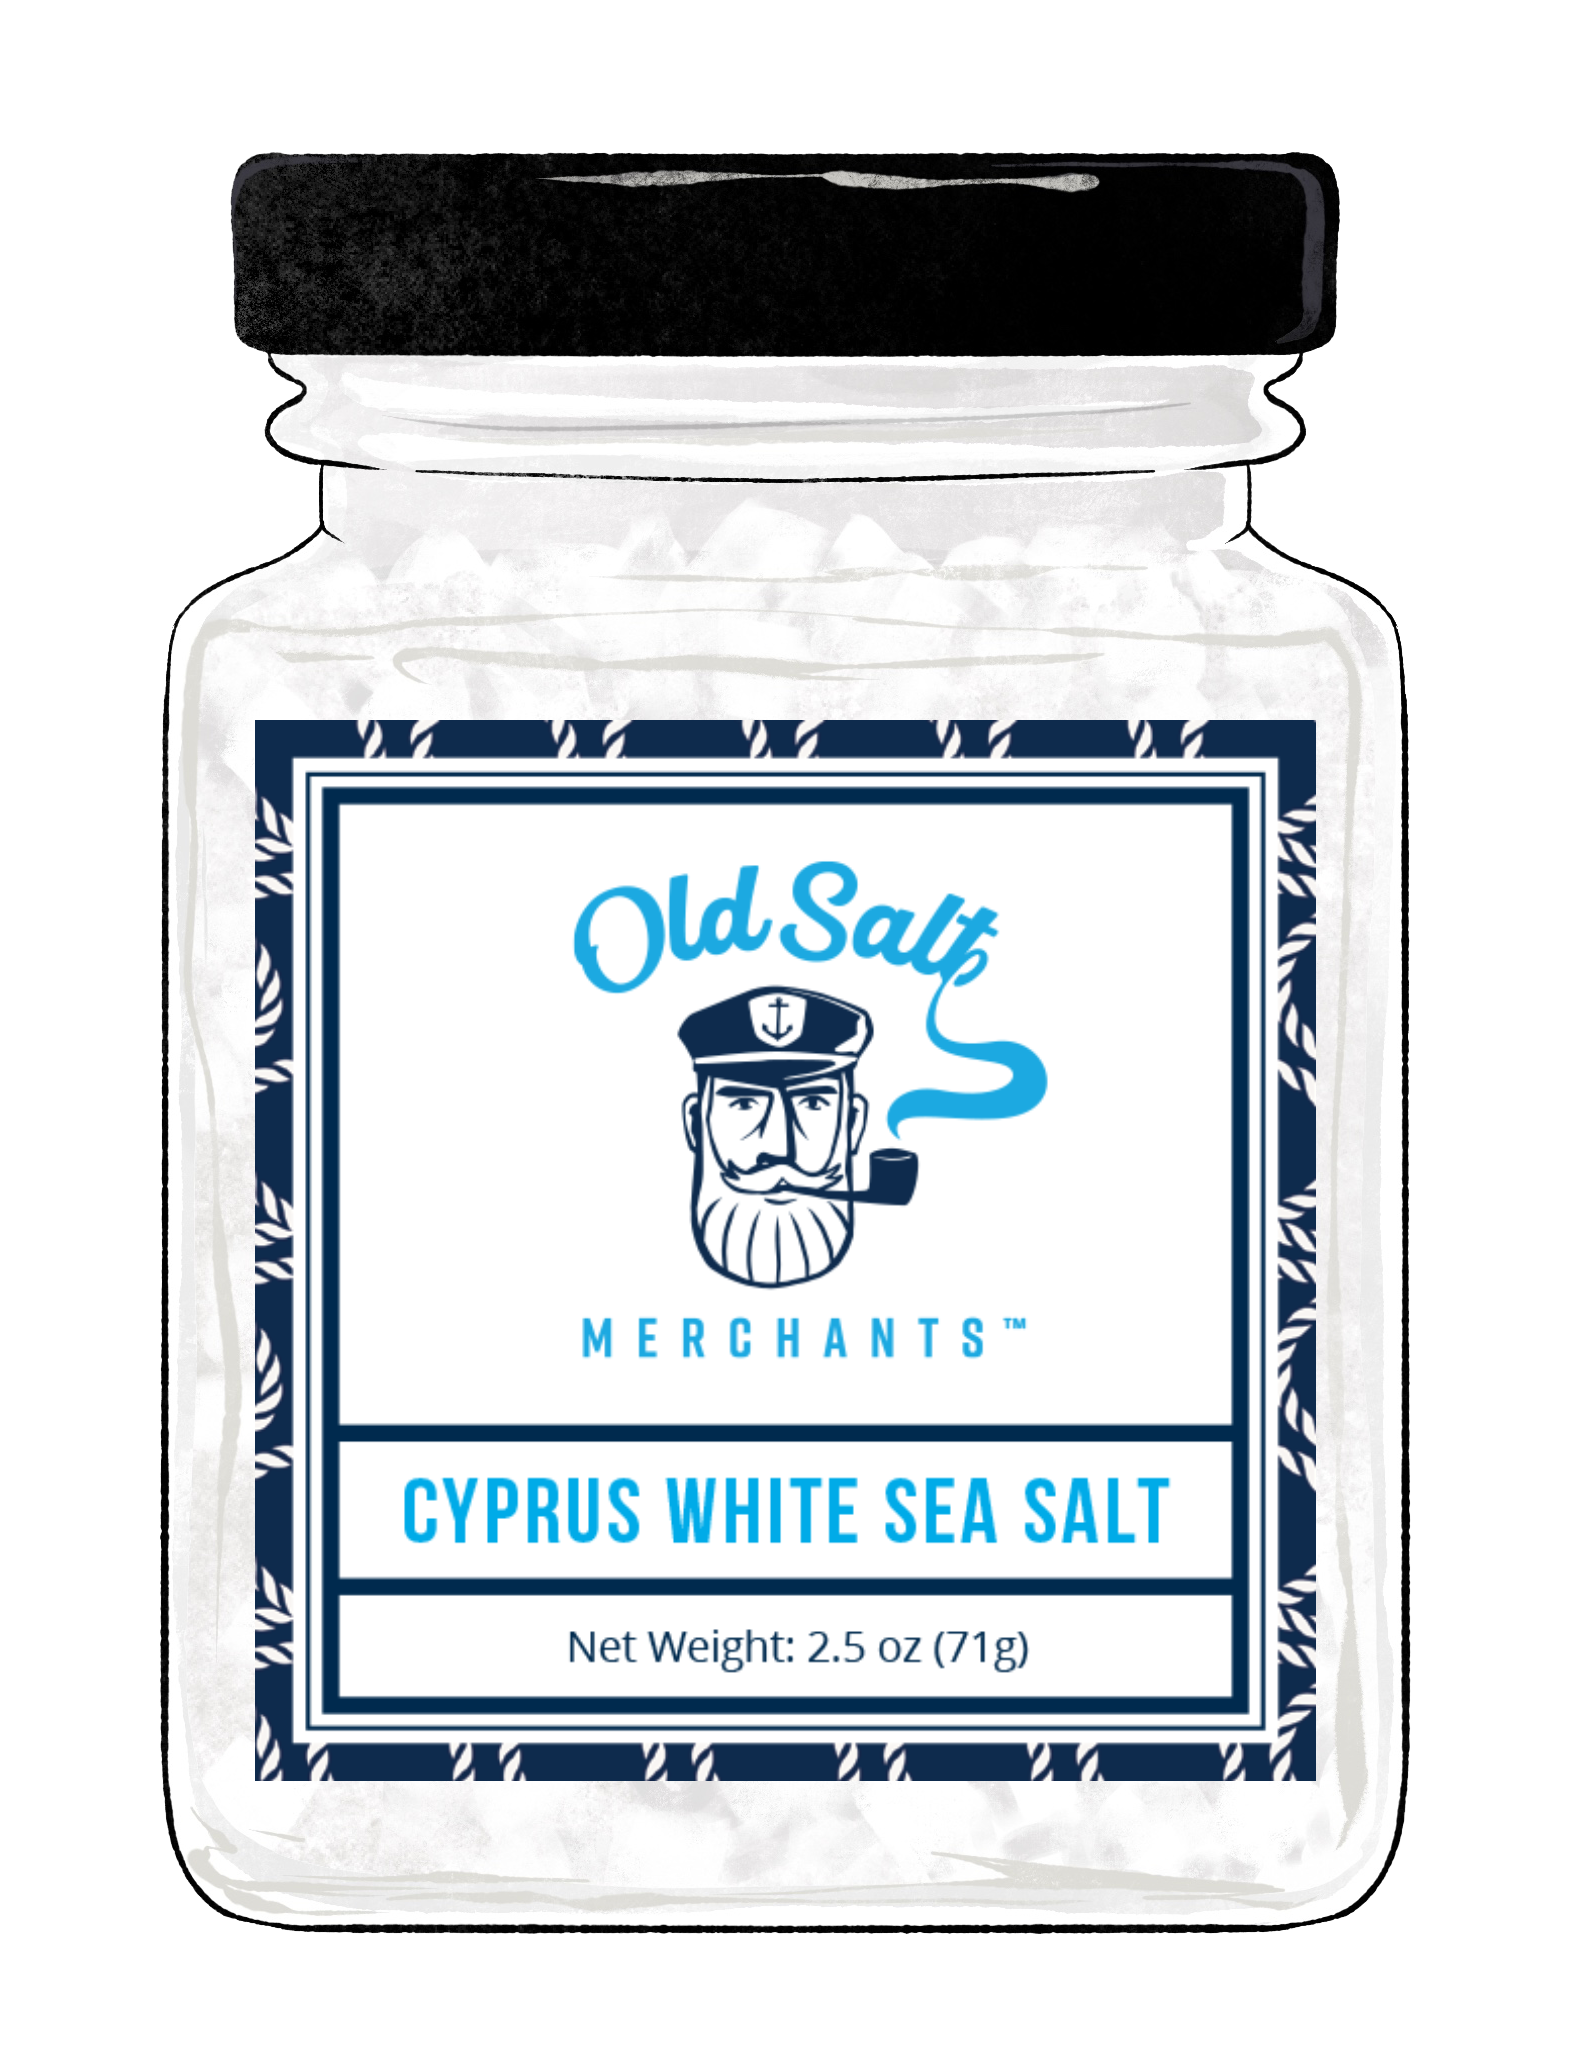 Cyprus Flake Sea Salt exclusive at Tastermonial